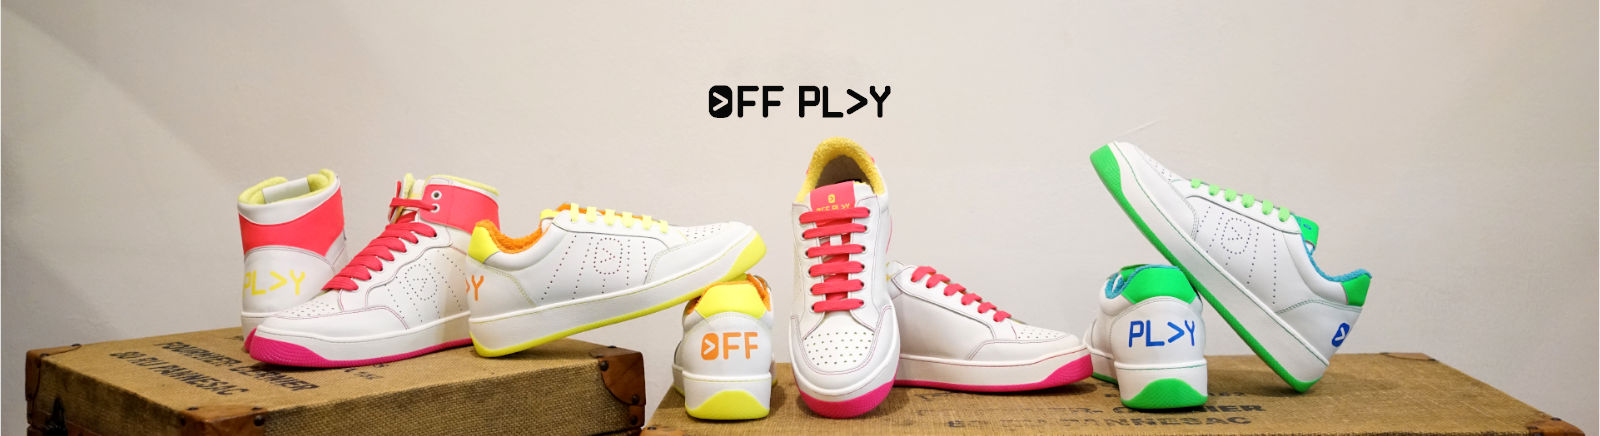 Off Play Schuhe online kaufen im GISY Schuhe Shop